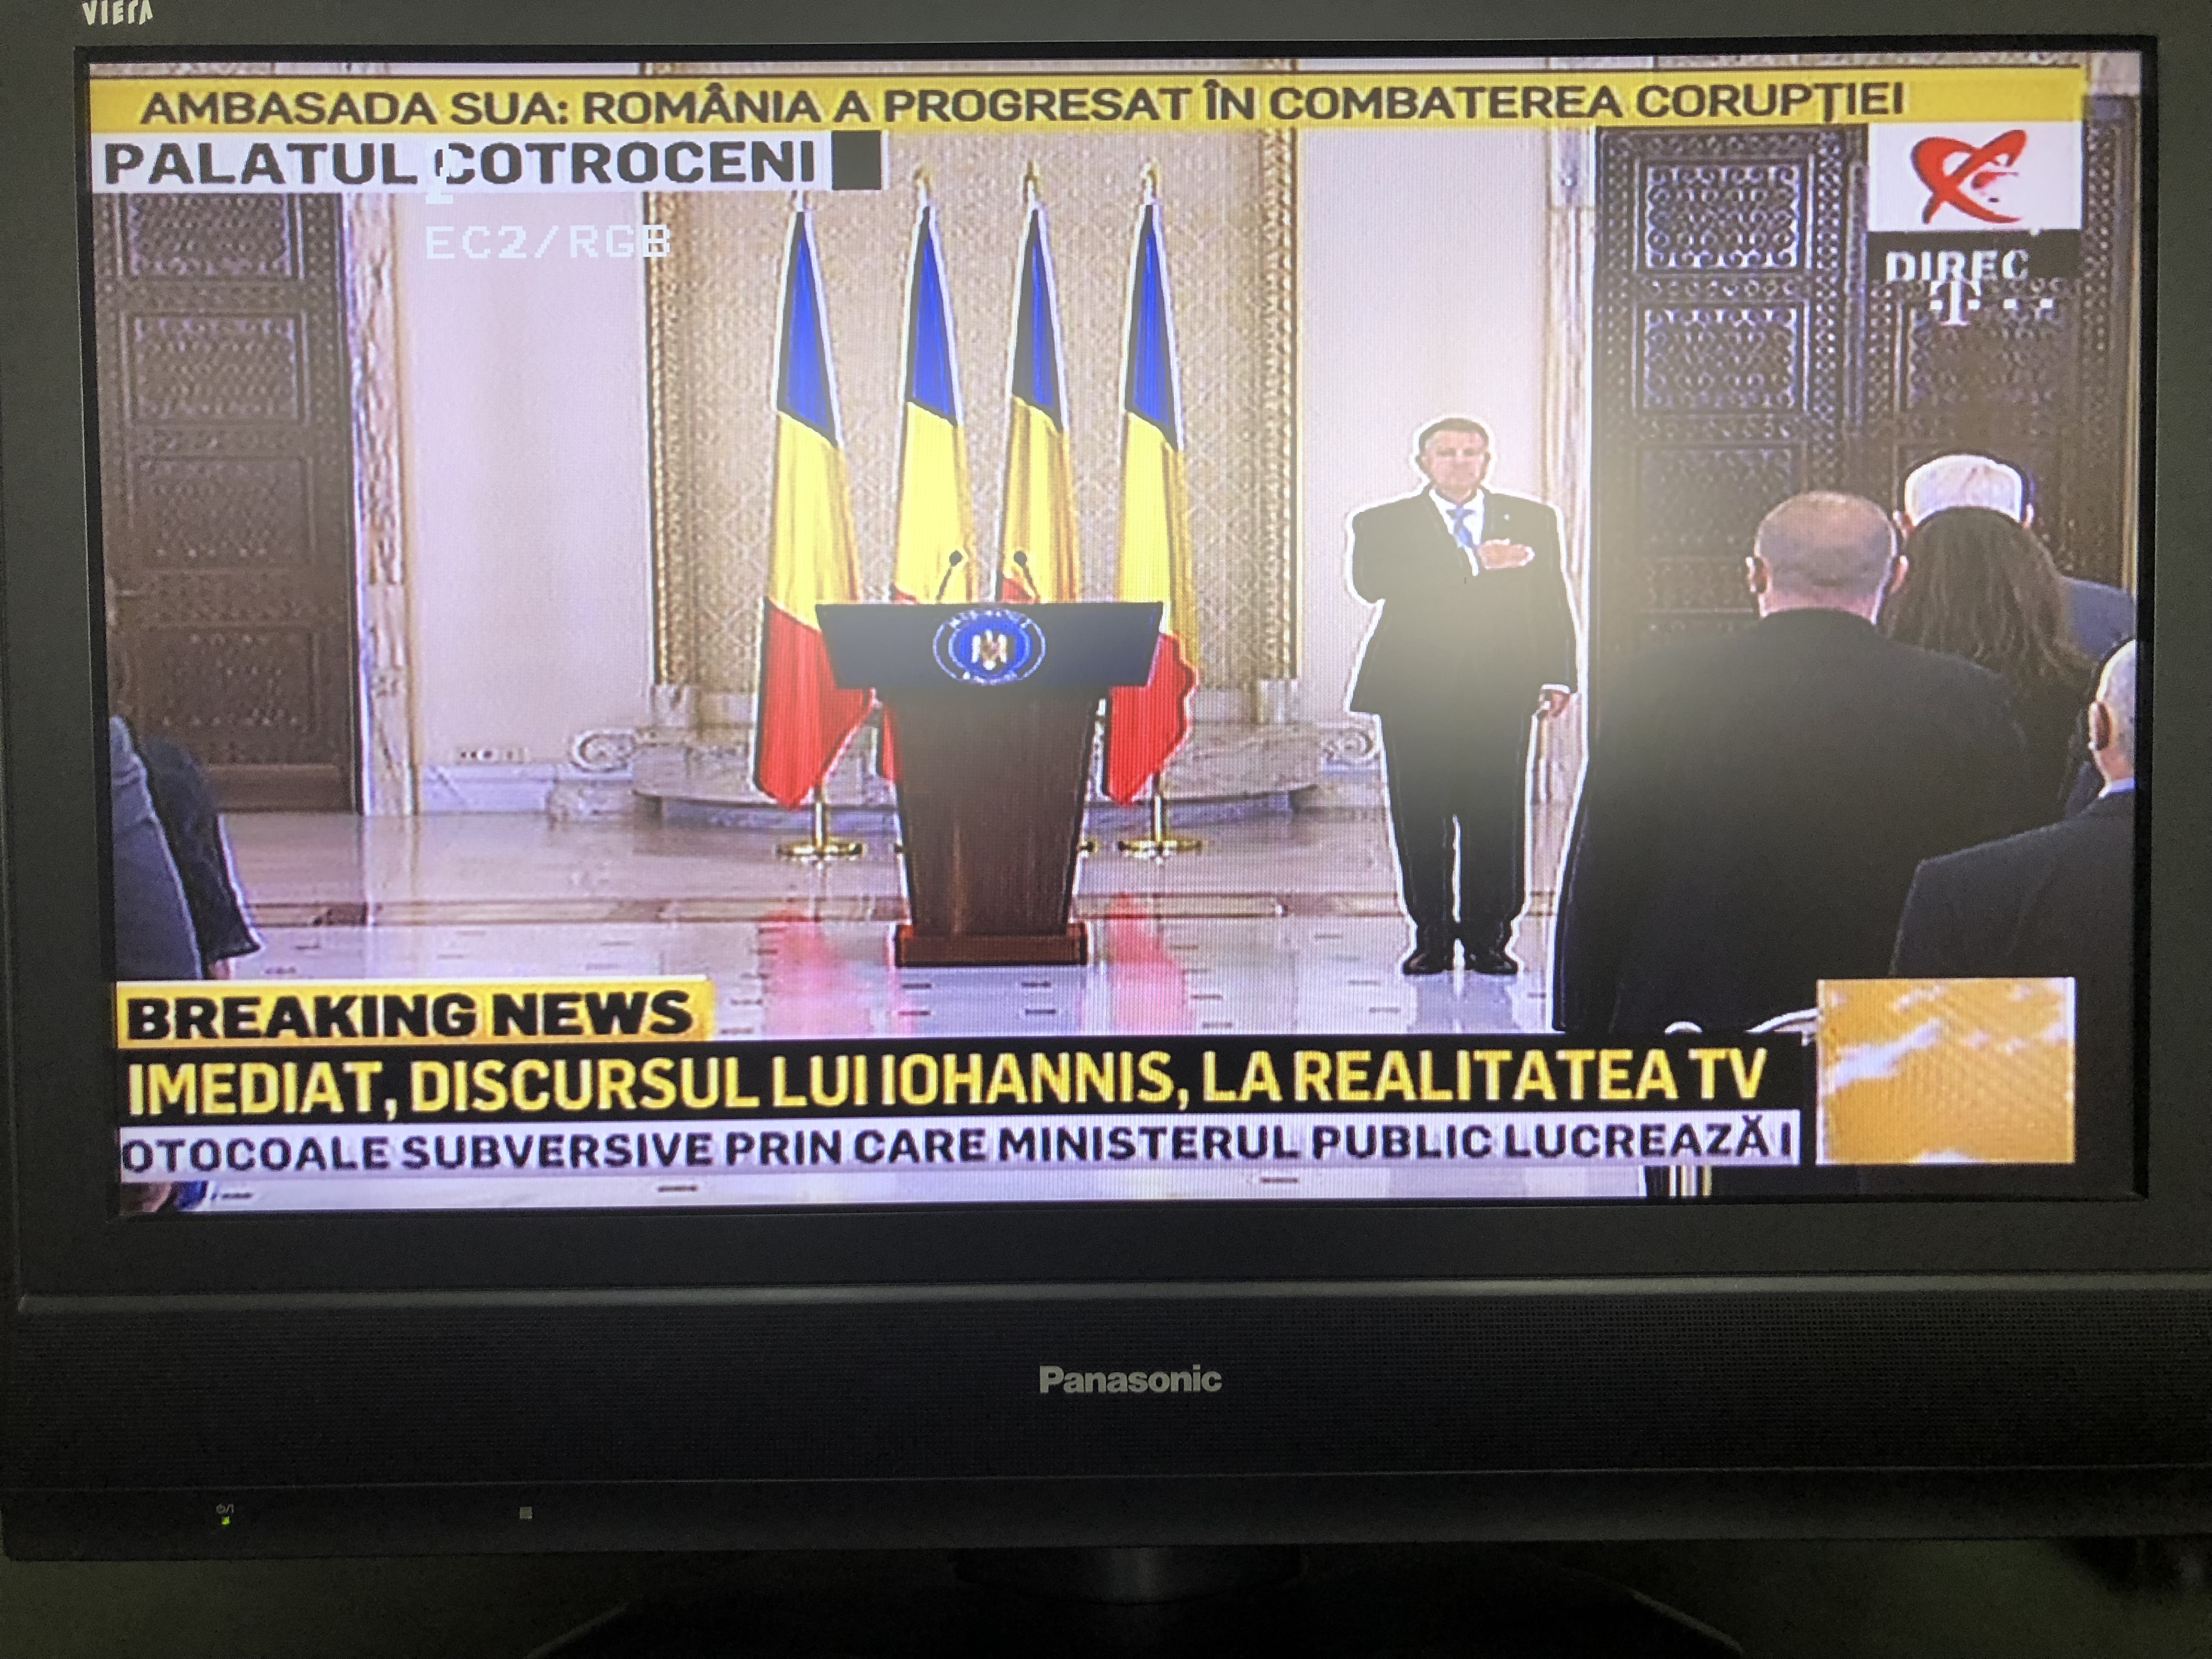 Romanian TV news